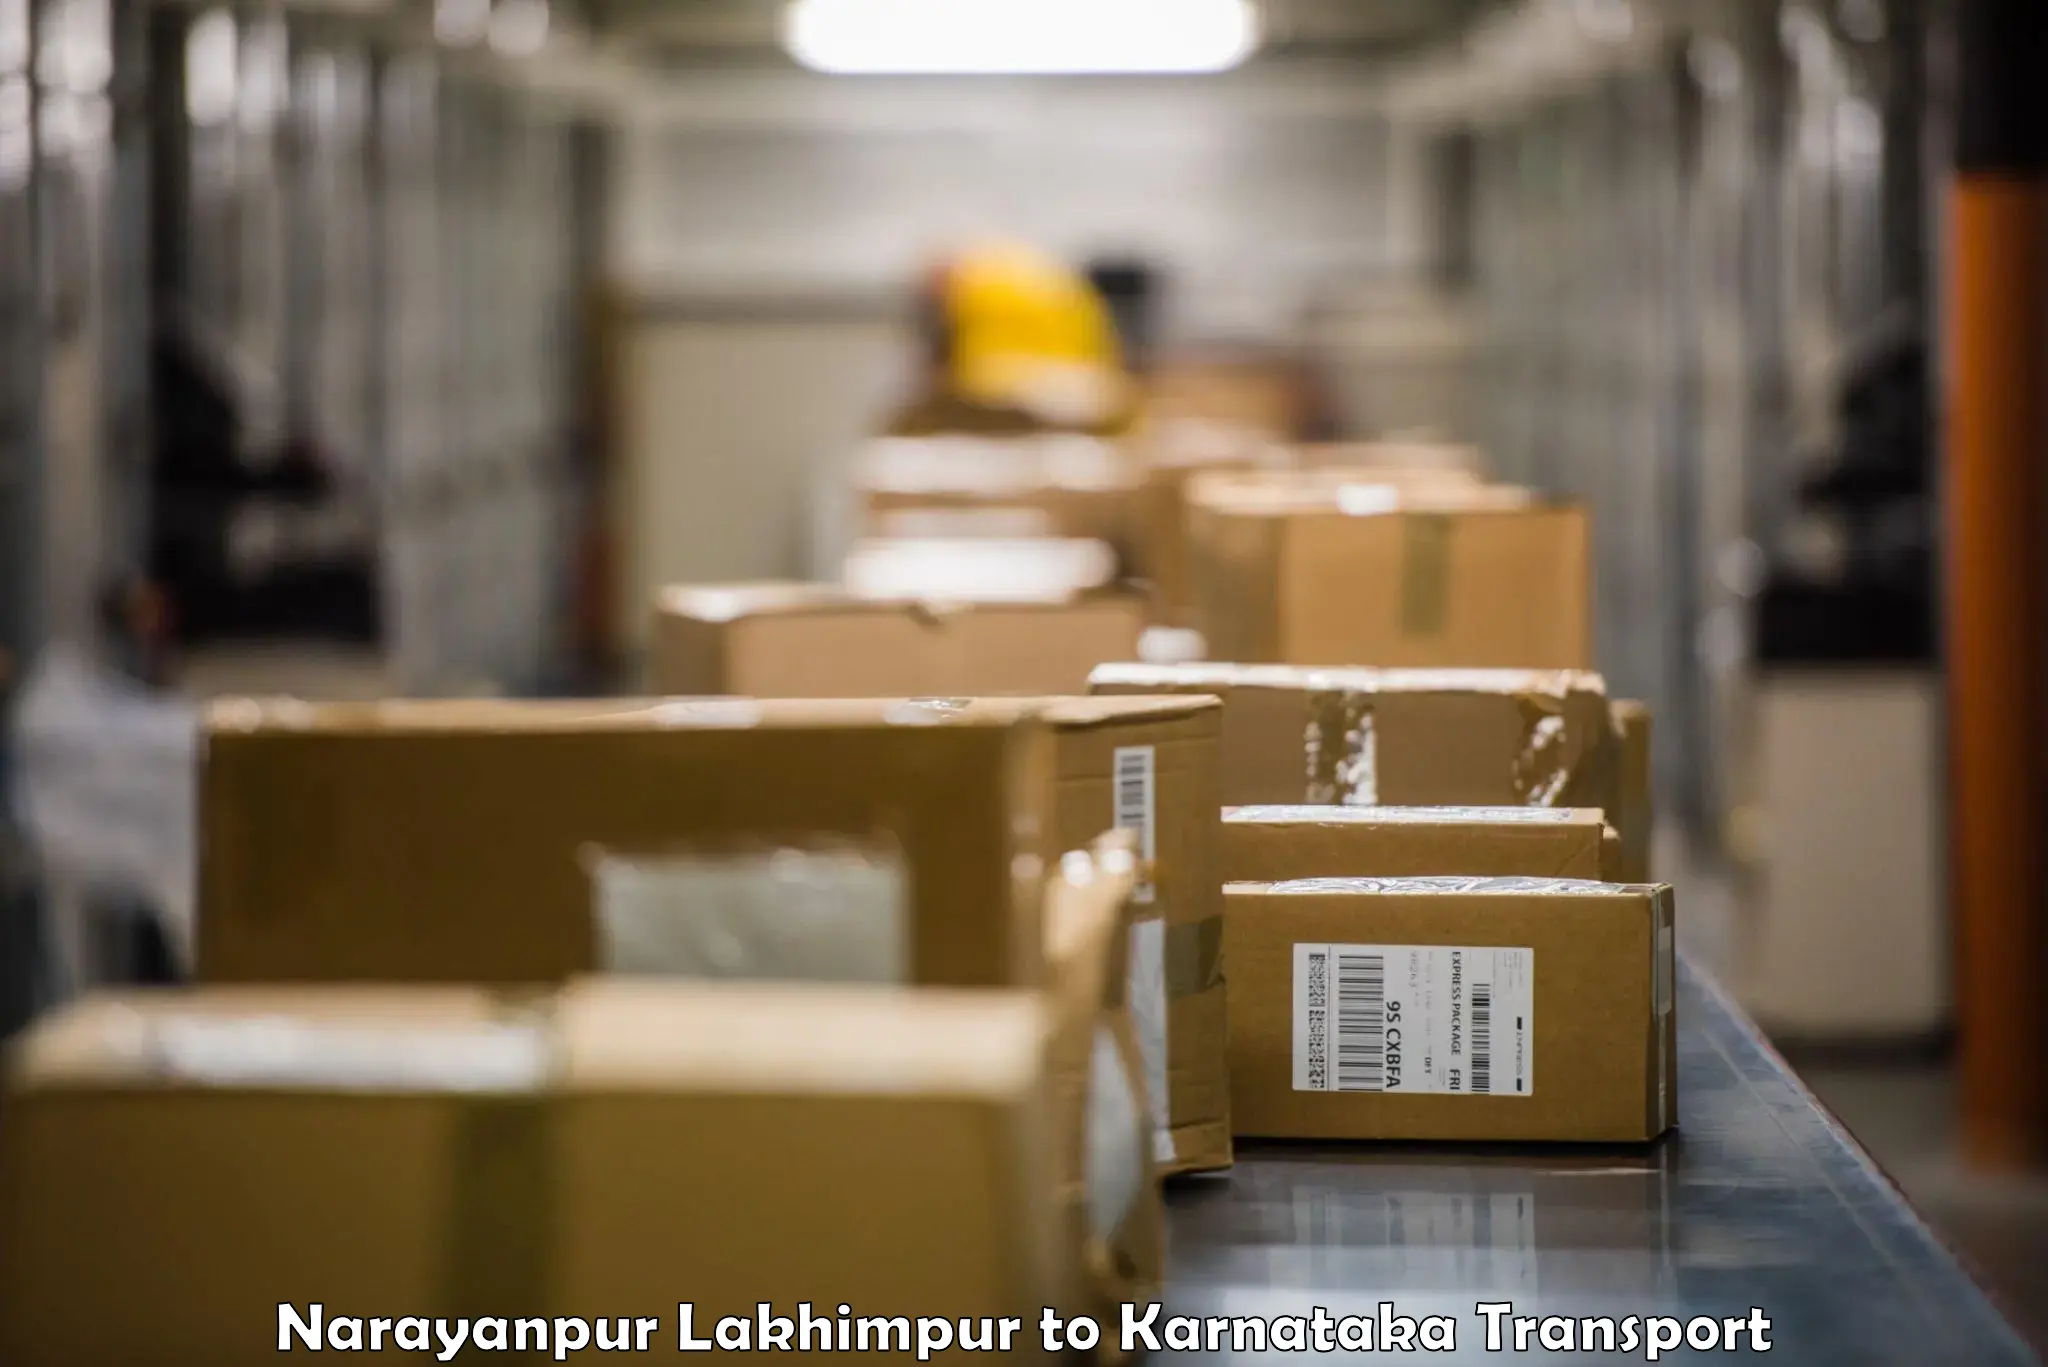 Container transport service Narayanpur Lakhimpur to Yenepoya Mangalore